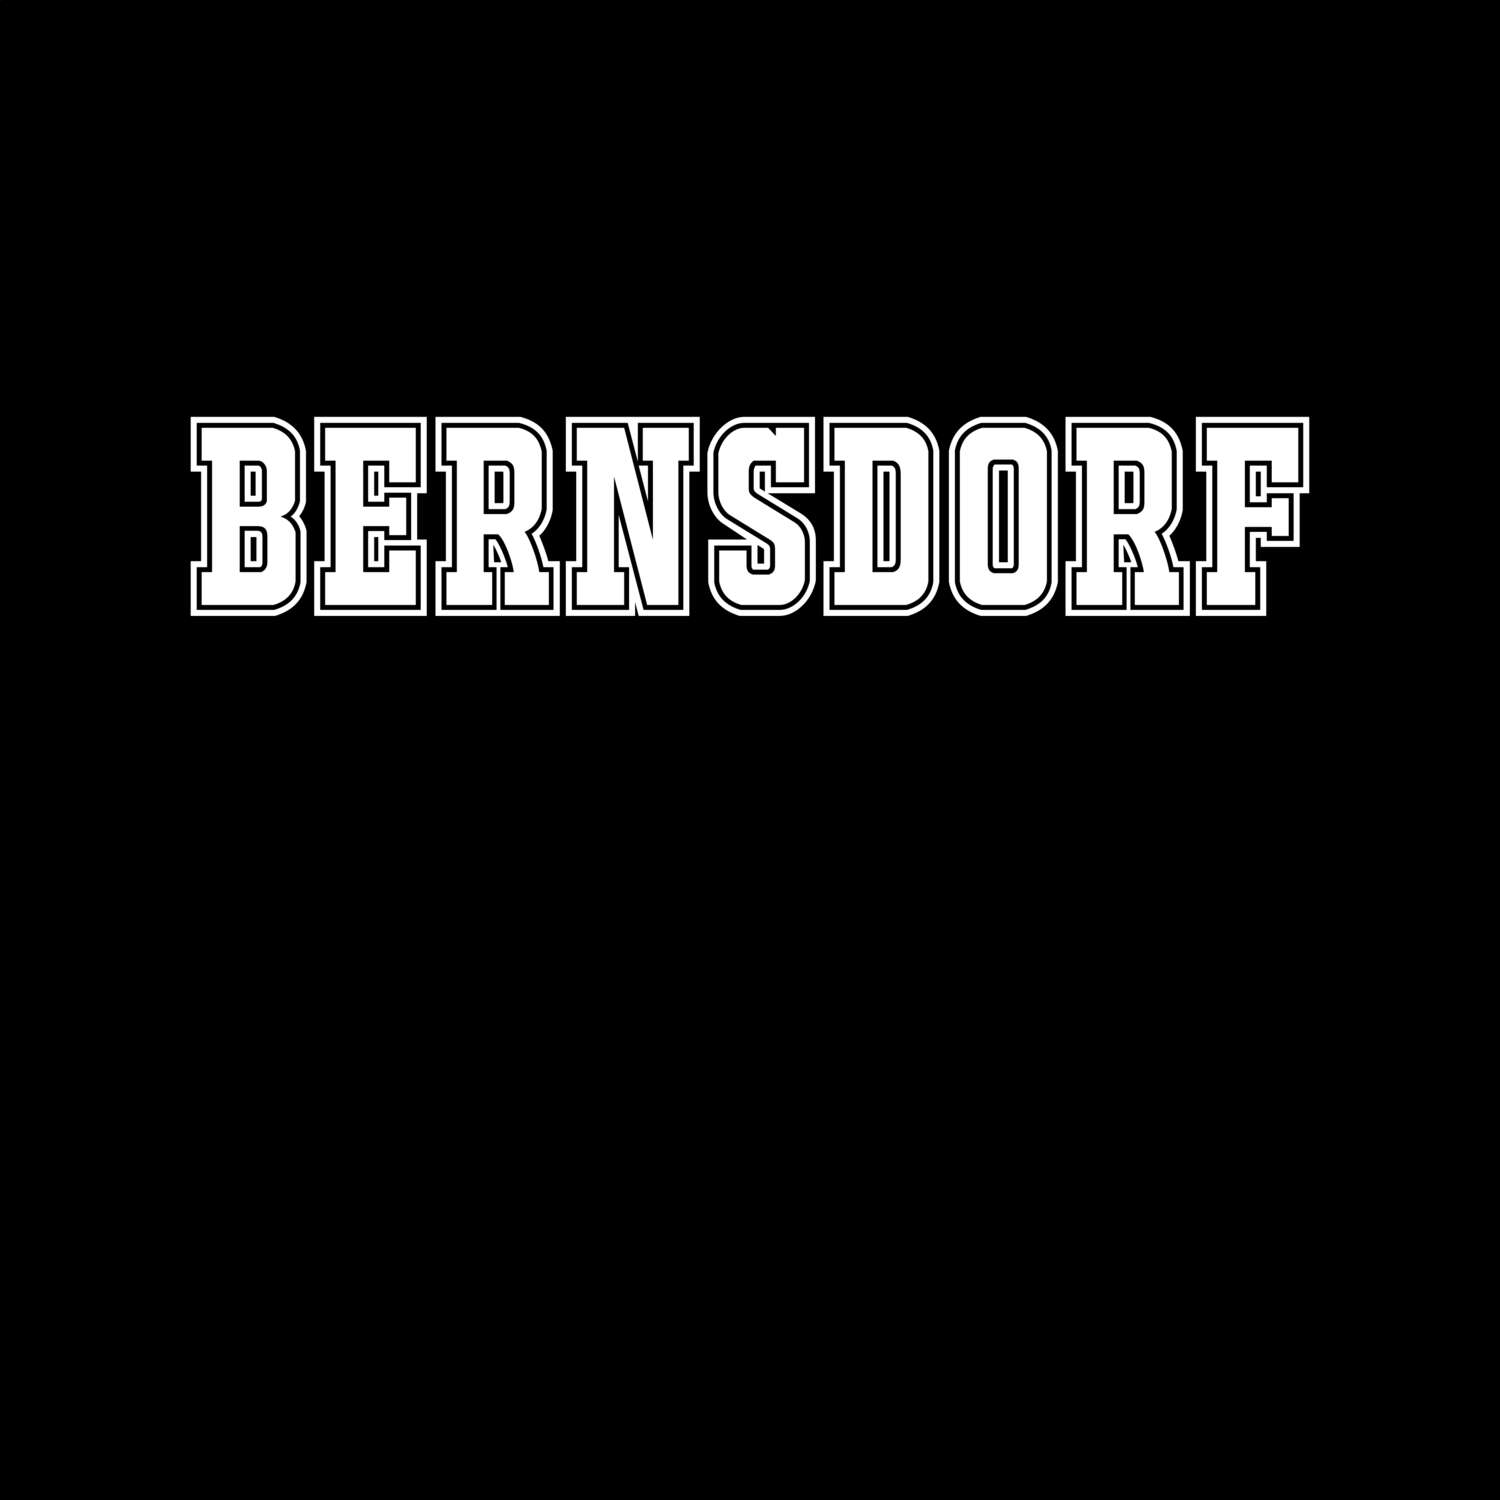 Bernsdorf T-Shirt »Classic«